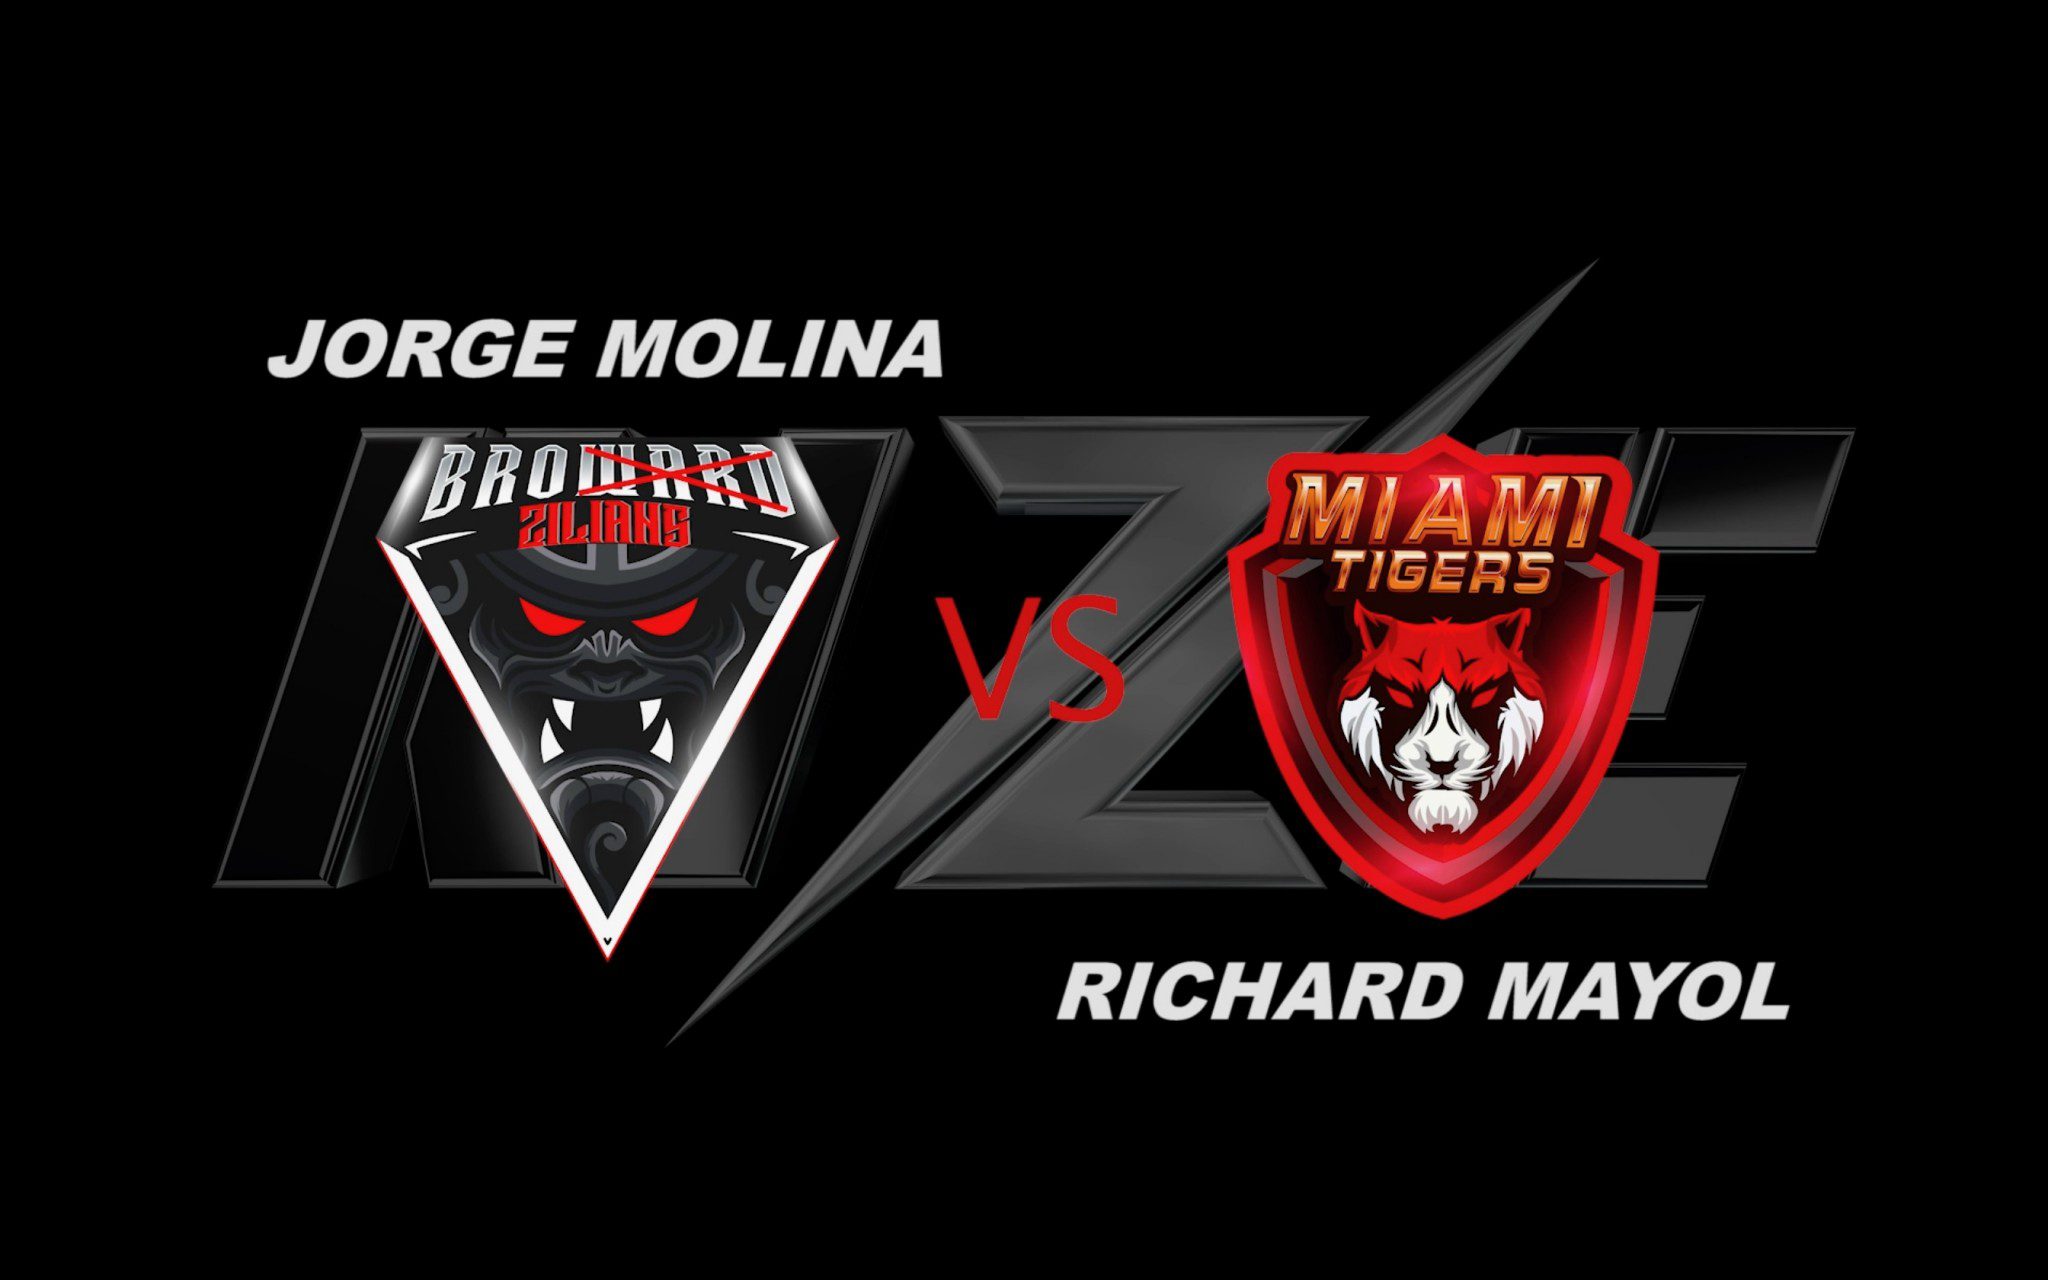 Jorge Molina vs Richard Mayol